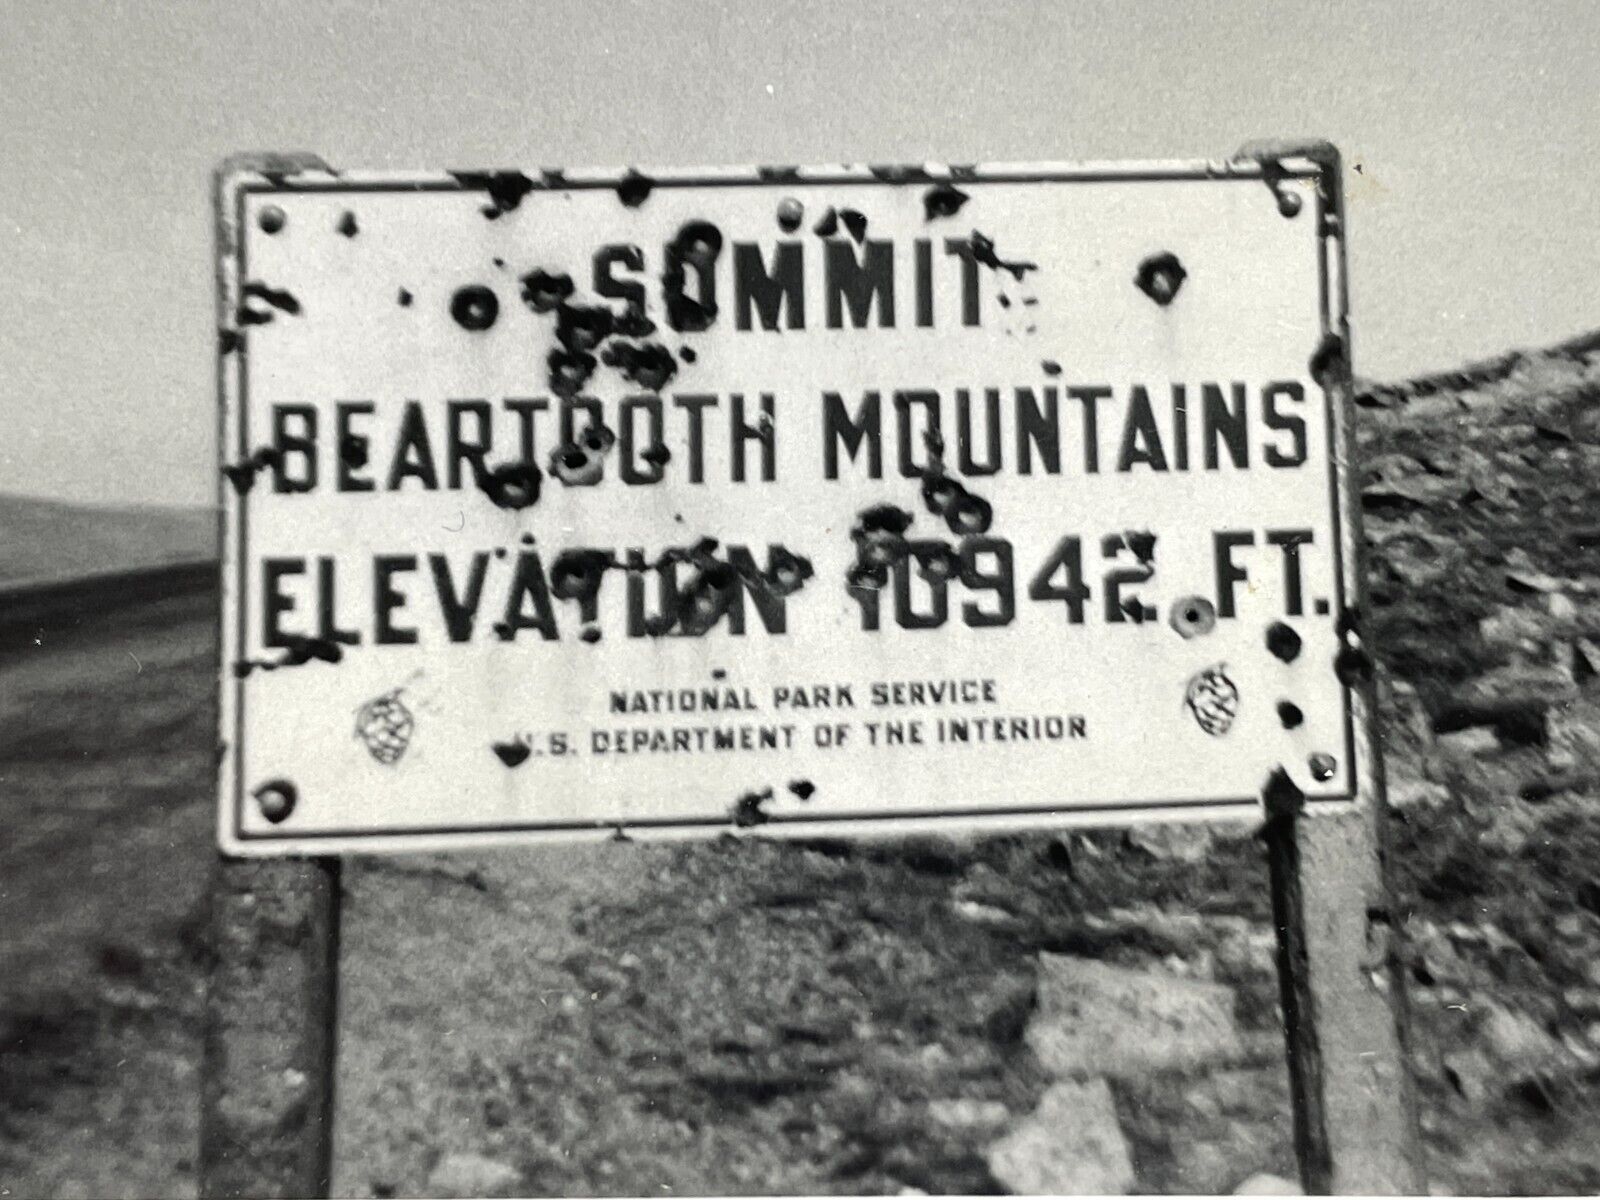 QC Photograph Summit Beartooth Mountain Road Sign Shotgun Holes Artistic 1950's